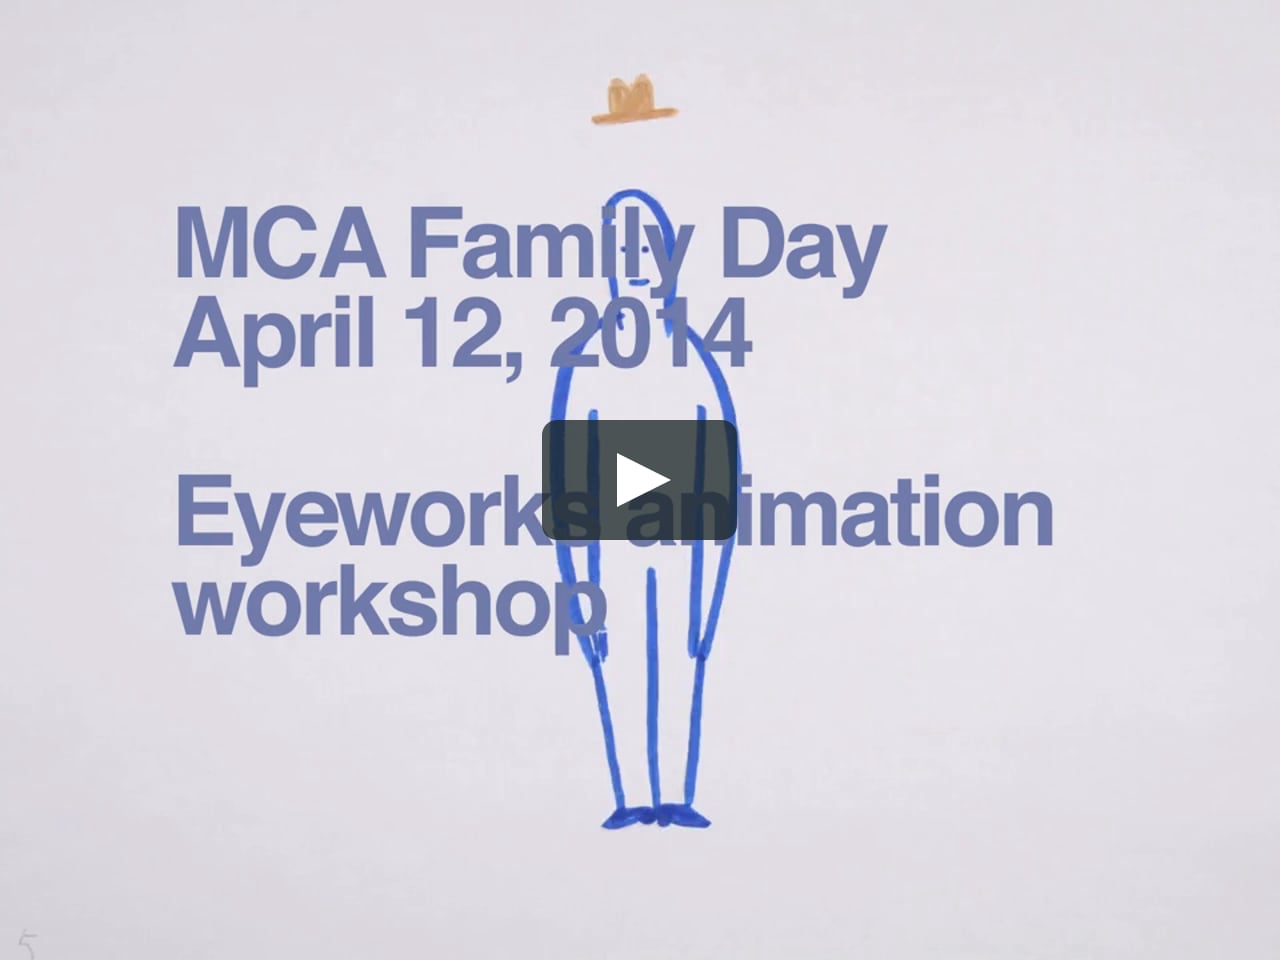 Eyeworks Animation Workshop, MCA Family Day, April 12, 2014 on Vimeo